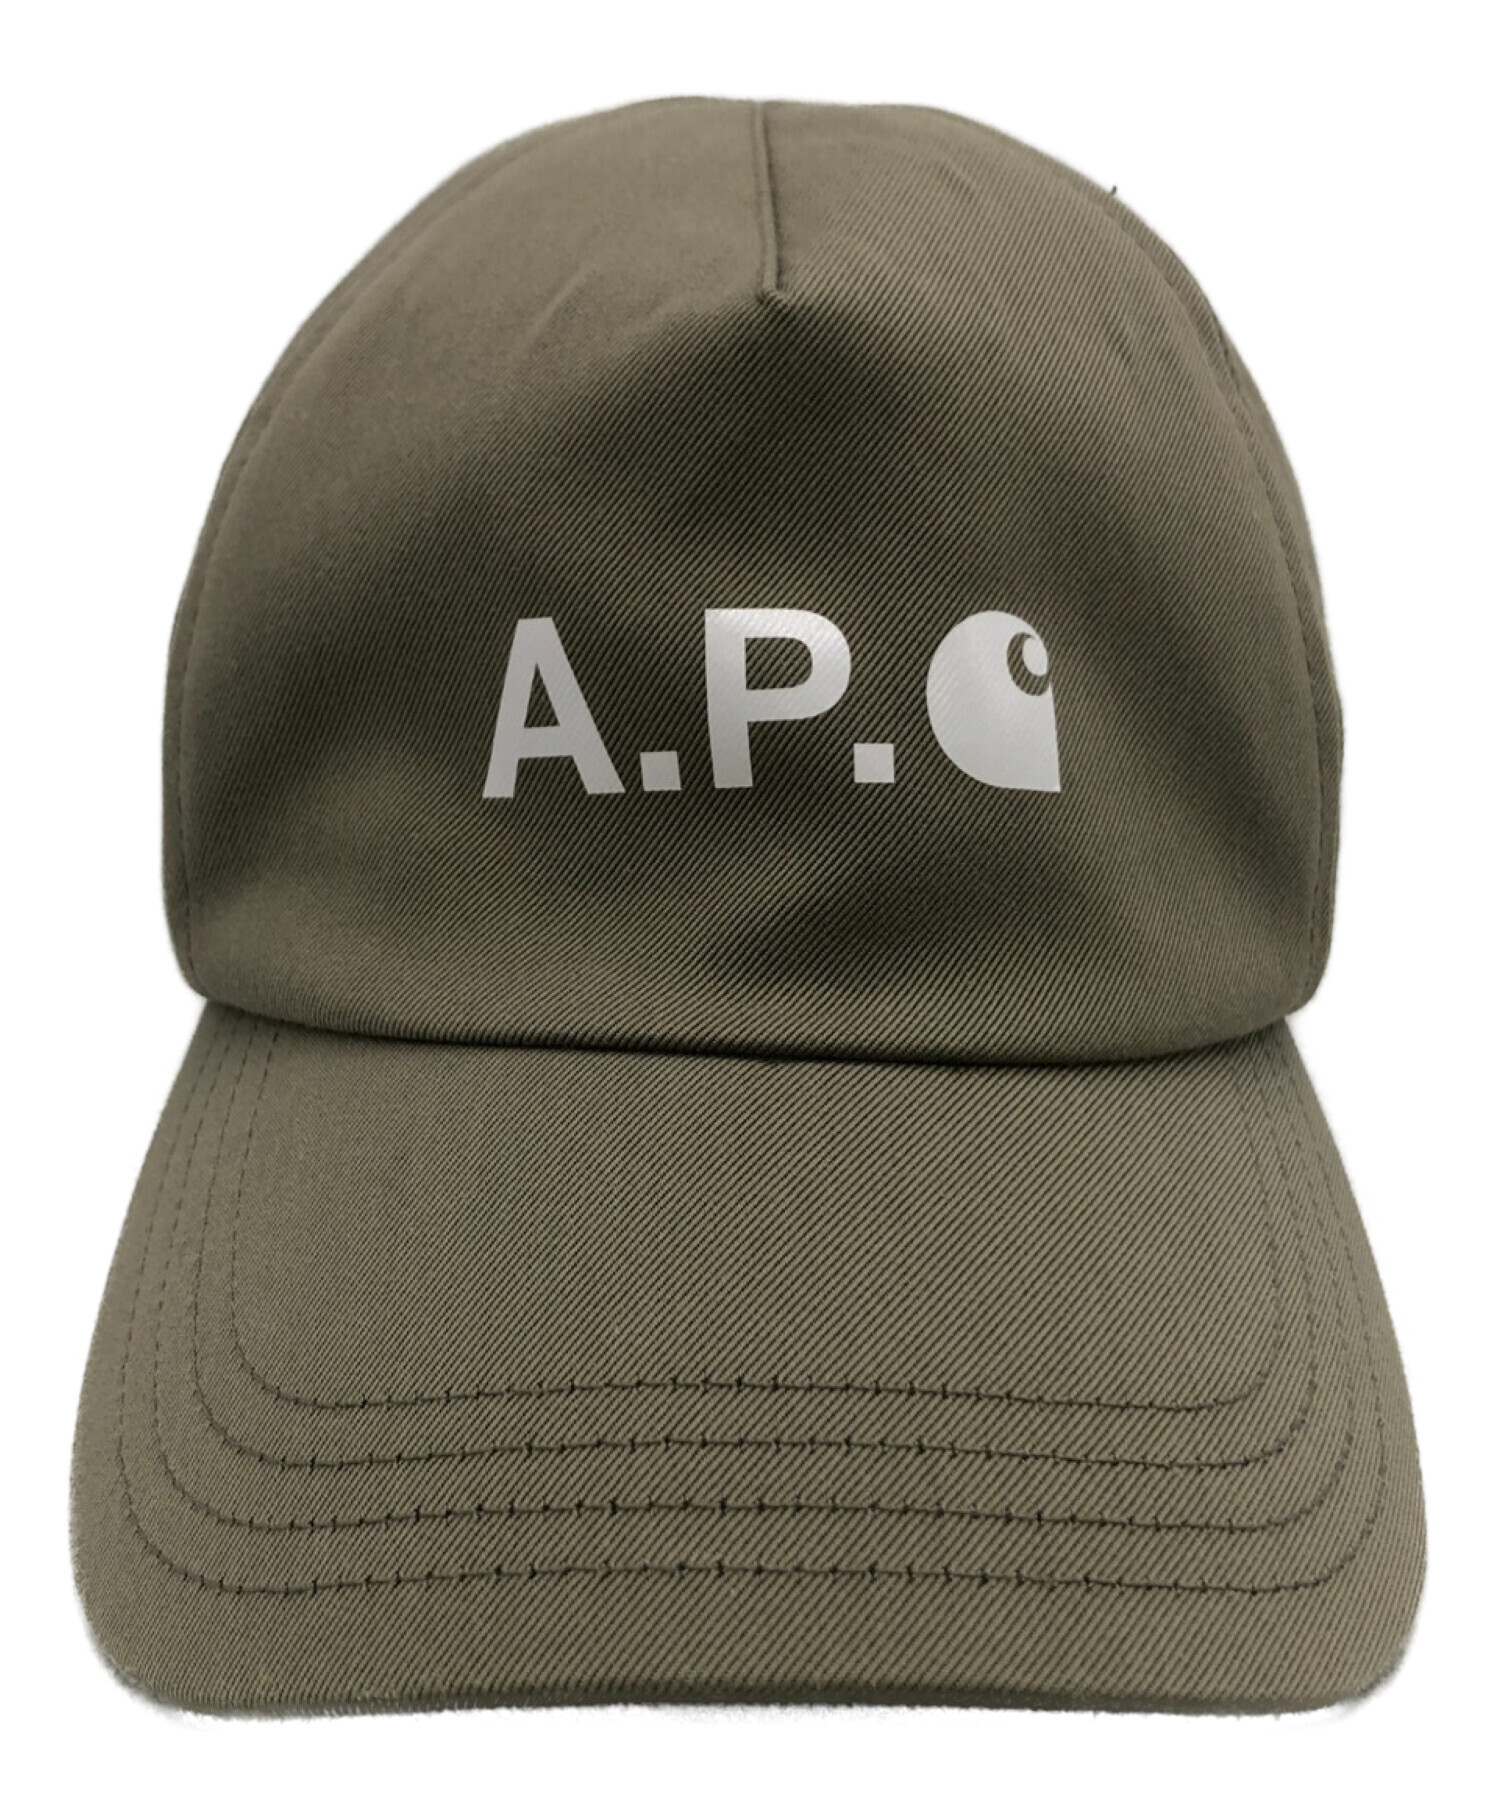 A.P.C. × CARHARTT WIP (アーペーセー×カーハートダブリューアイピー) キャップ オリーブ